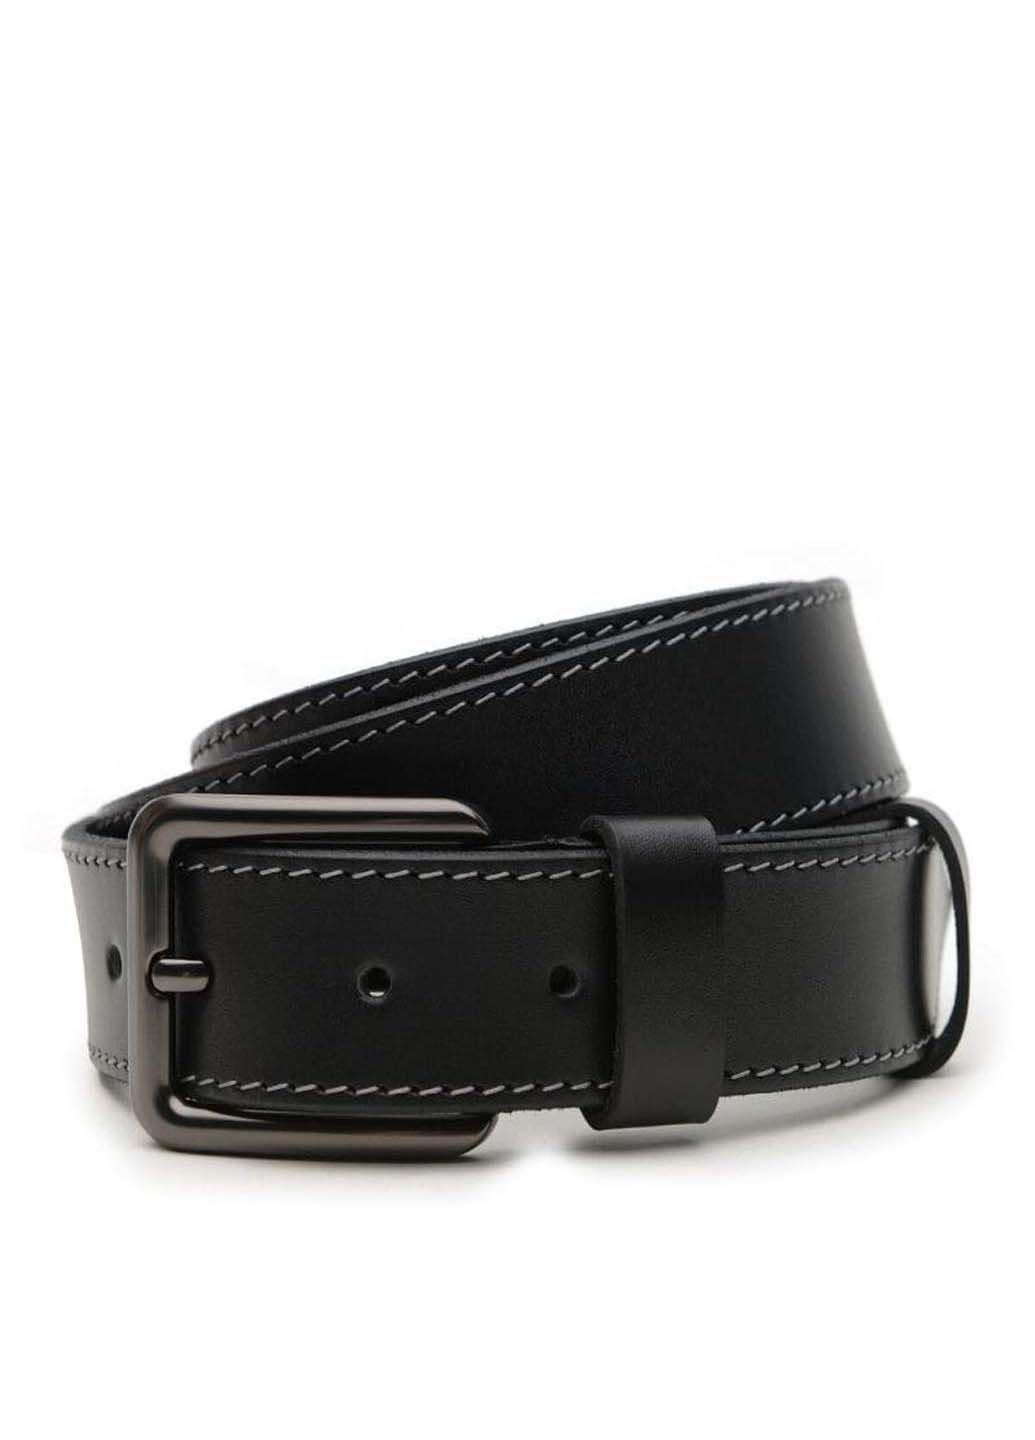 Ремень Borsa Leather v1115gx29-black (285697142)